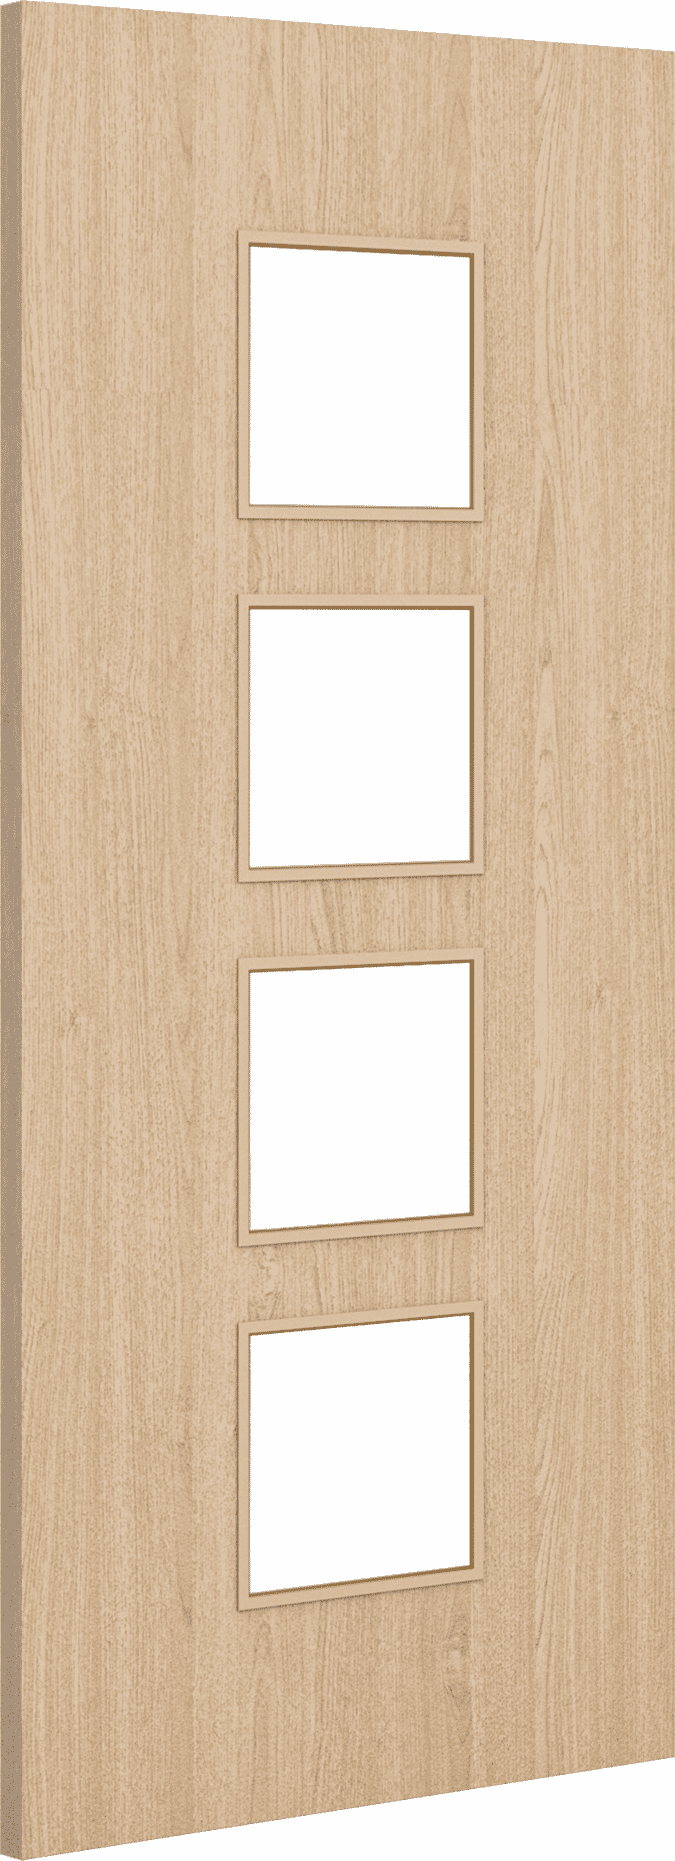 2040mm x 426mm x 44mm Architectural Oak 09 Frosted Glazed - Prefinished FD30 Fire Door Blank